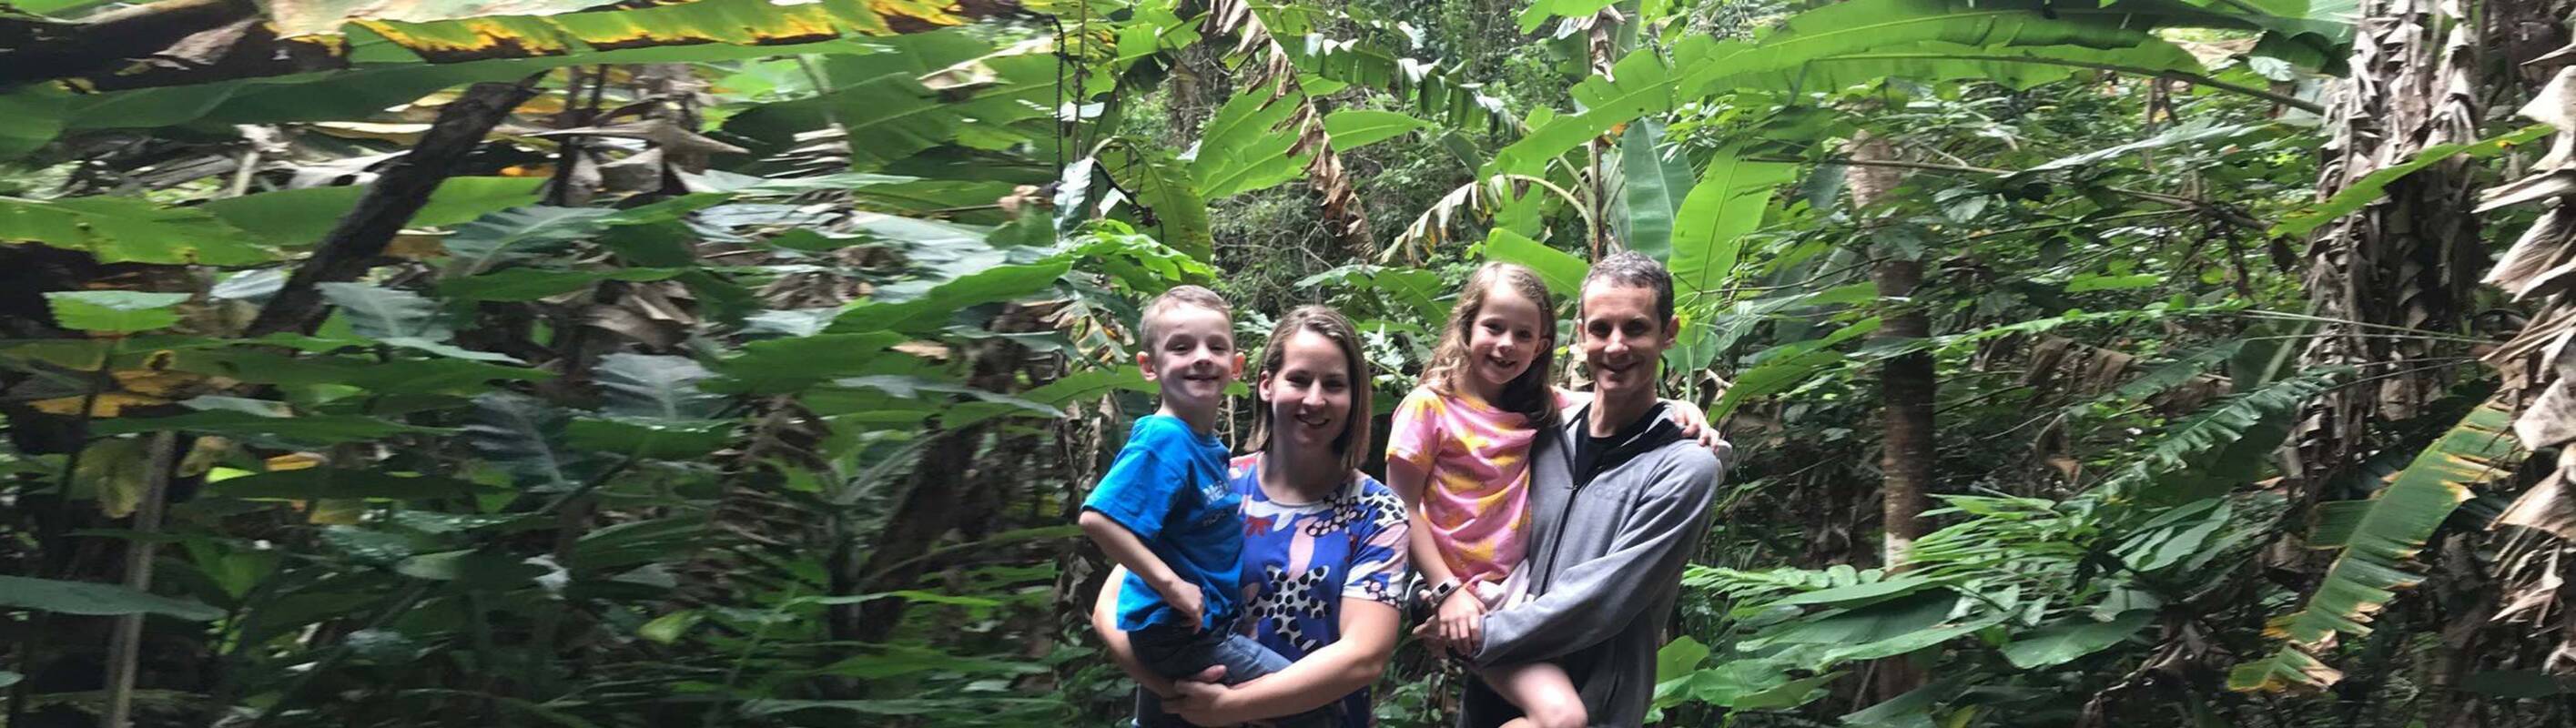 Make-A-Wish Australia wish kid Zak on his jungle adventure in Queensland with family